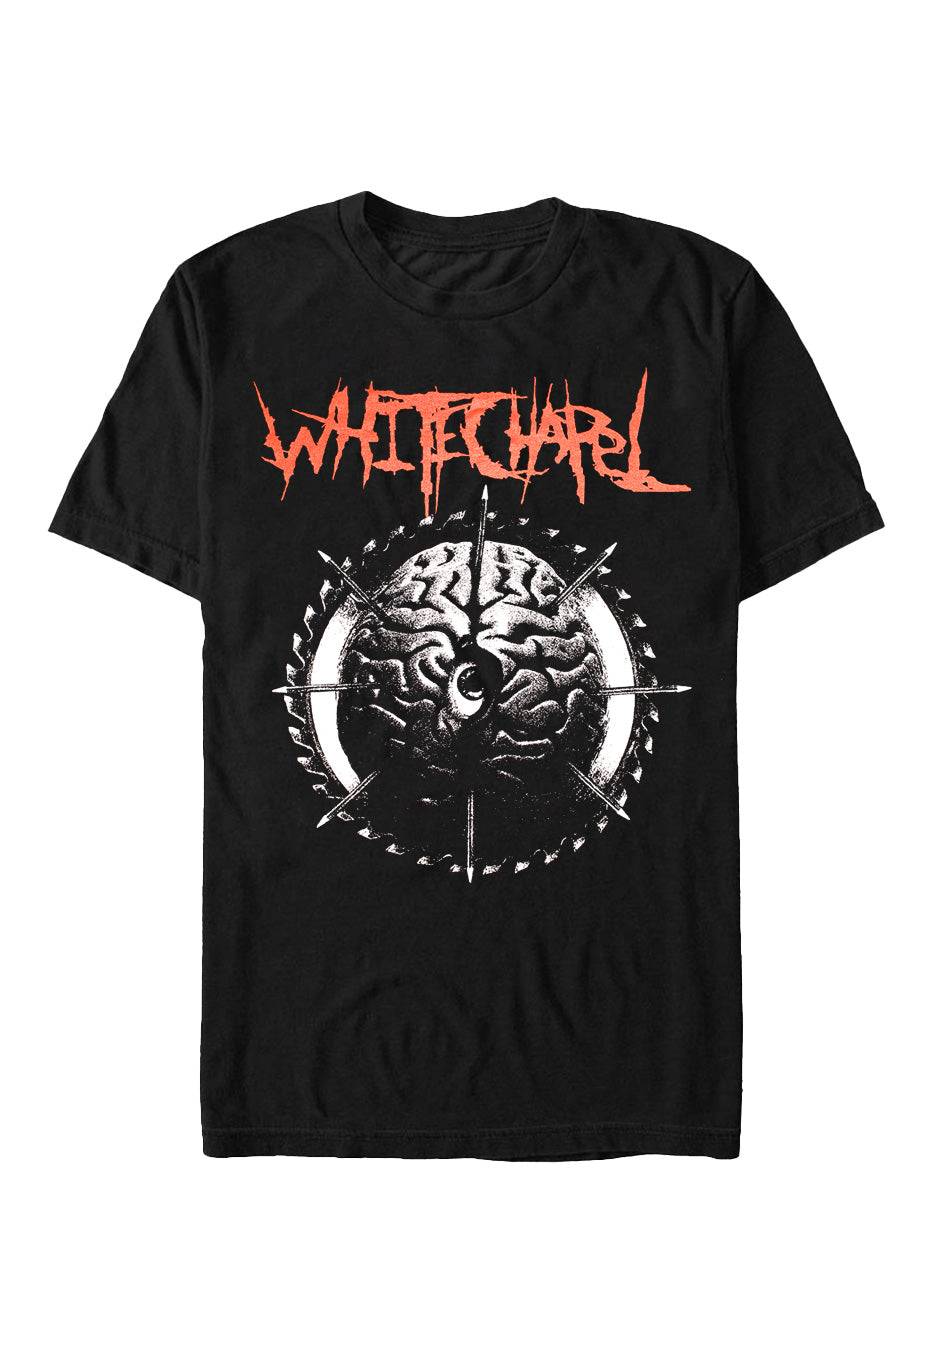 Whitechapel - Dementia - T-Shirt